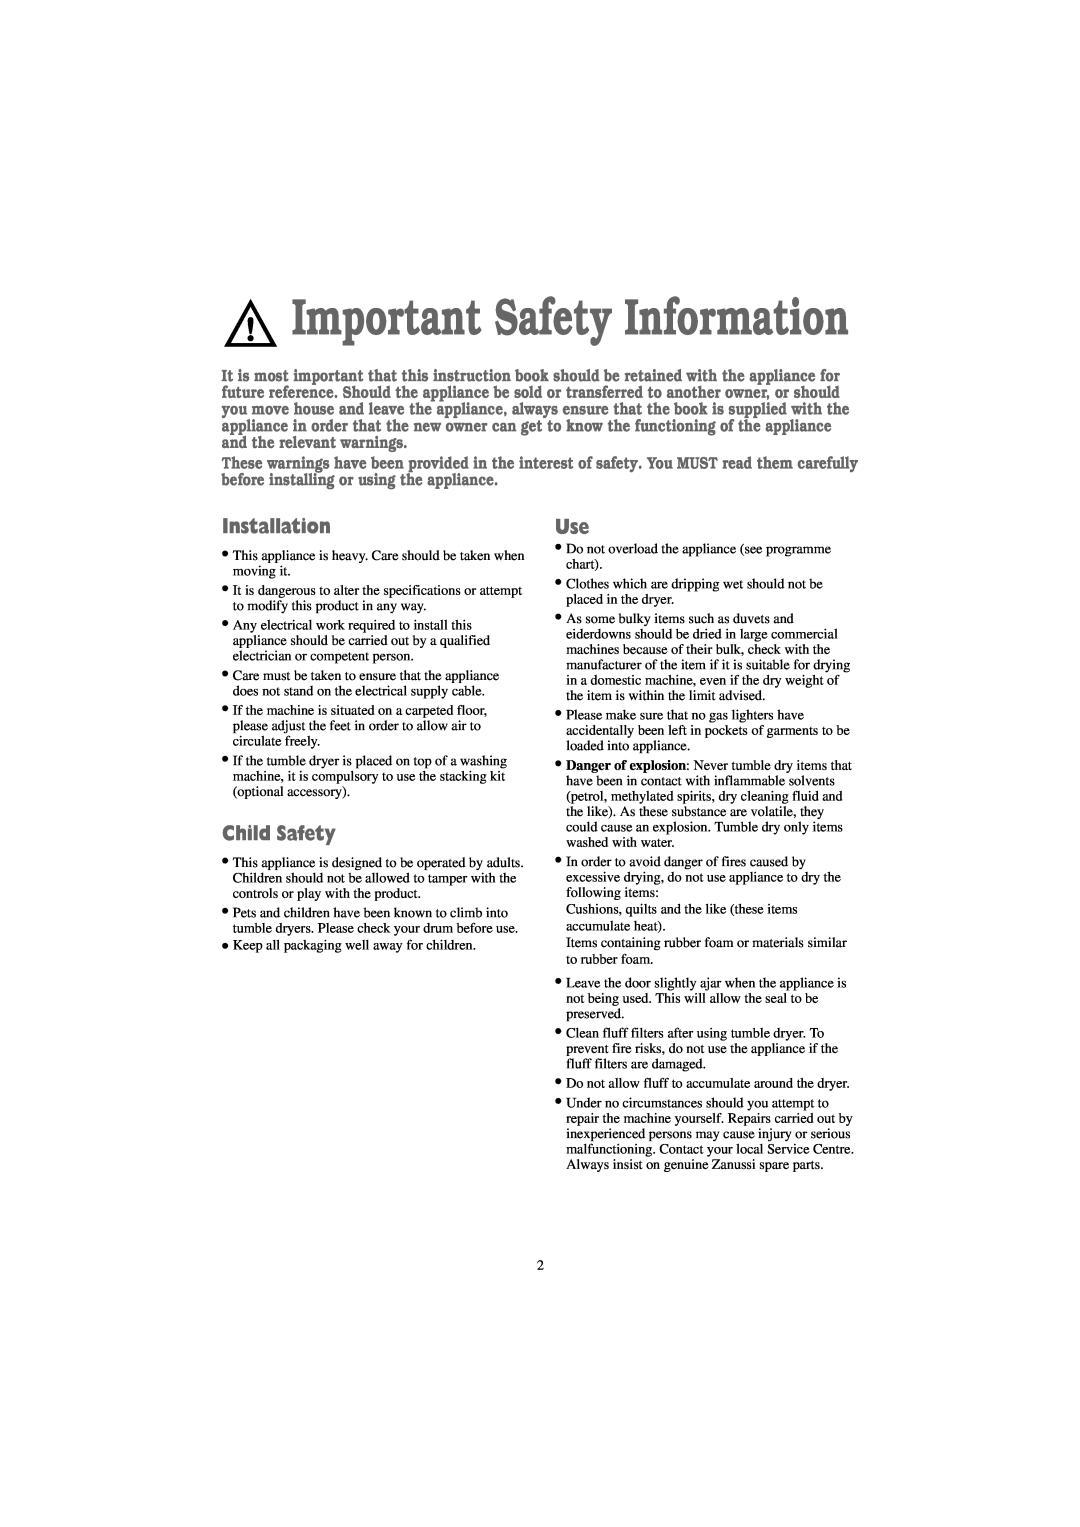 Zanussi TC 7114 S, TC 7114 W manual Installation, Child Safety, Important Safety Information 